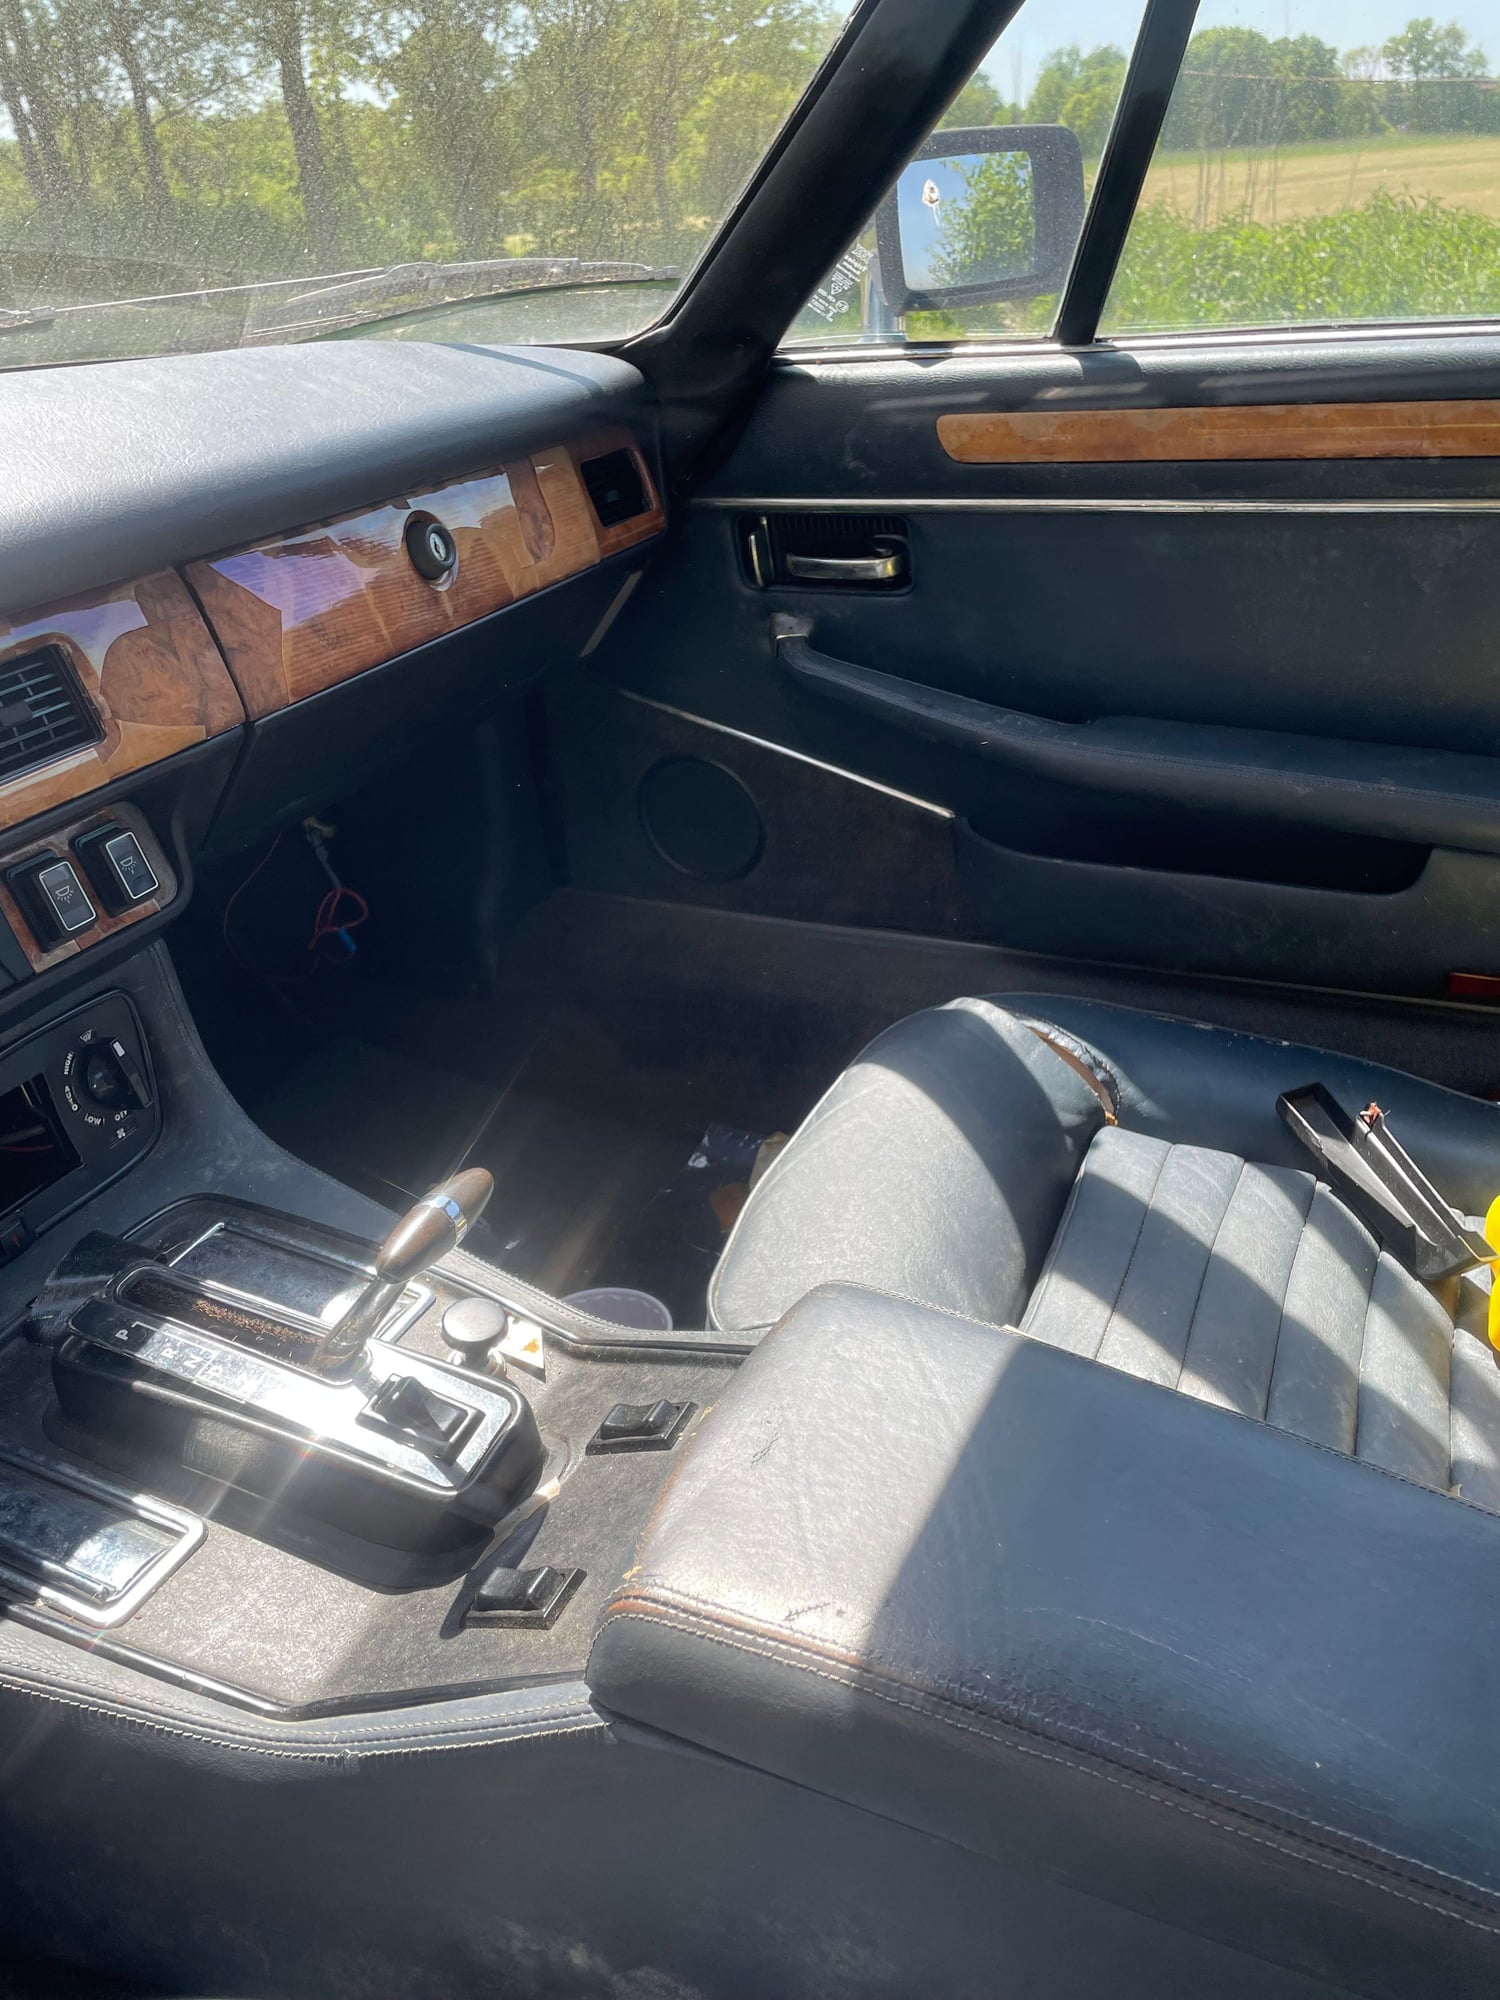 1985 Jaguar XJS - 1985 XJS - Used - VIN Sajnv5848fc119337 - 43,176 Miles - 12 cyl - 2WD - Automatic - Coupe - Blue - Wayland, MI 49348, United States